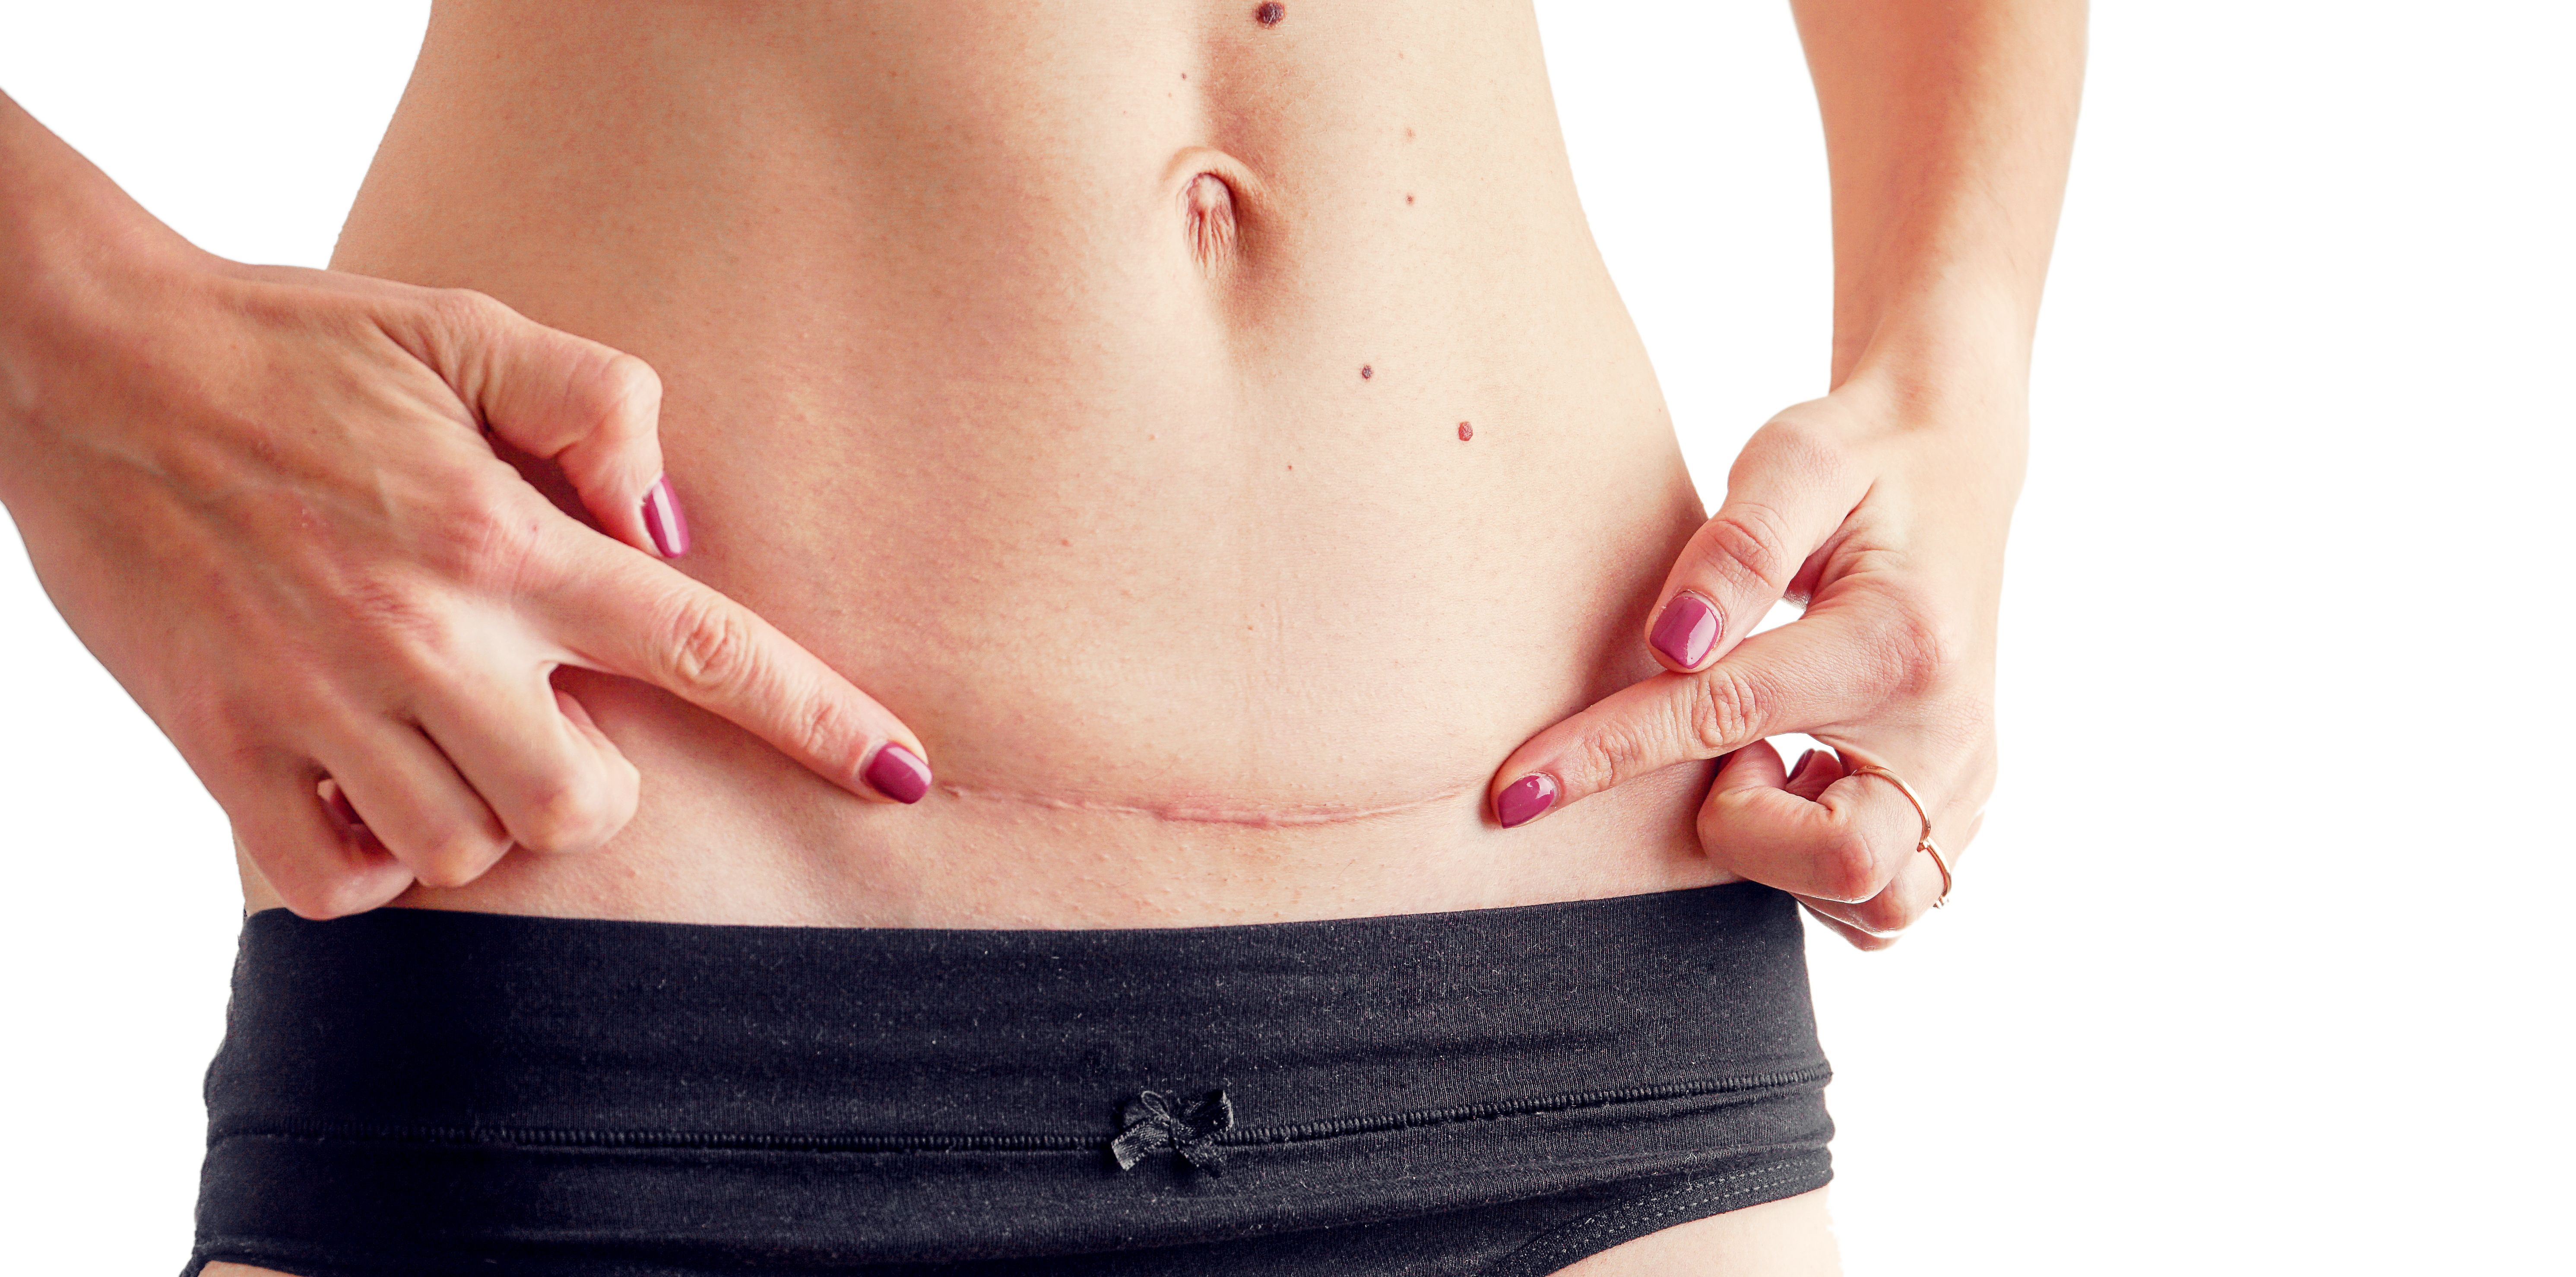 Endometriosis in Caesarean section incision scar